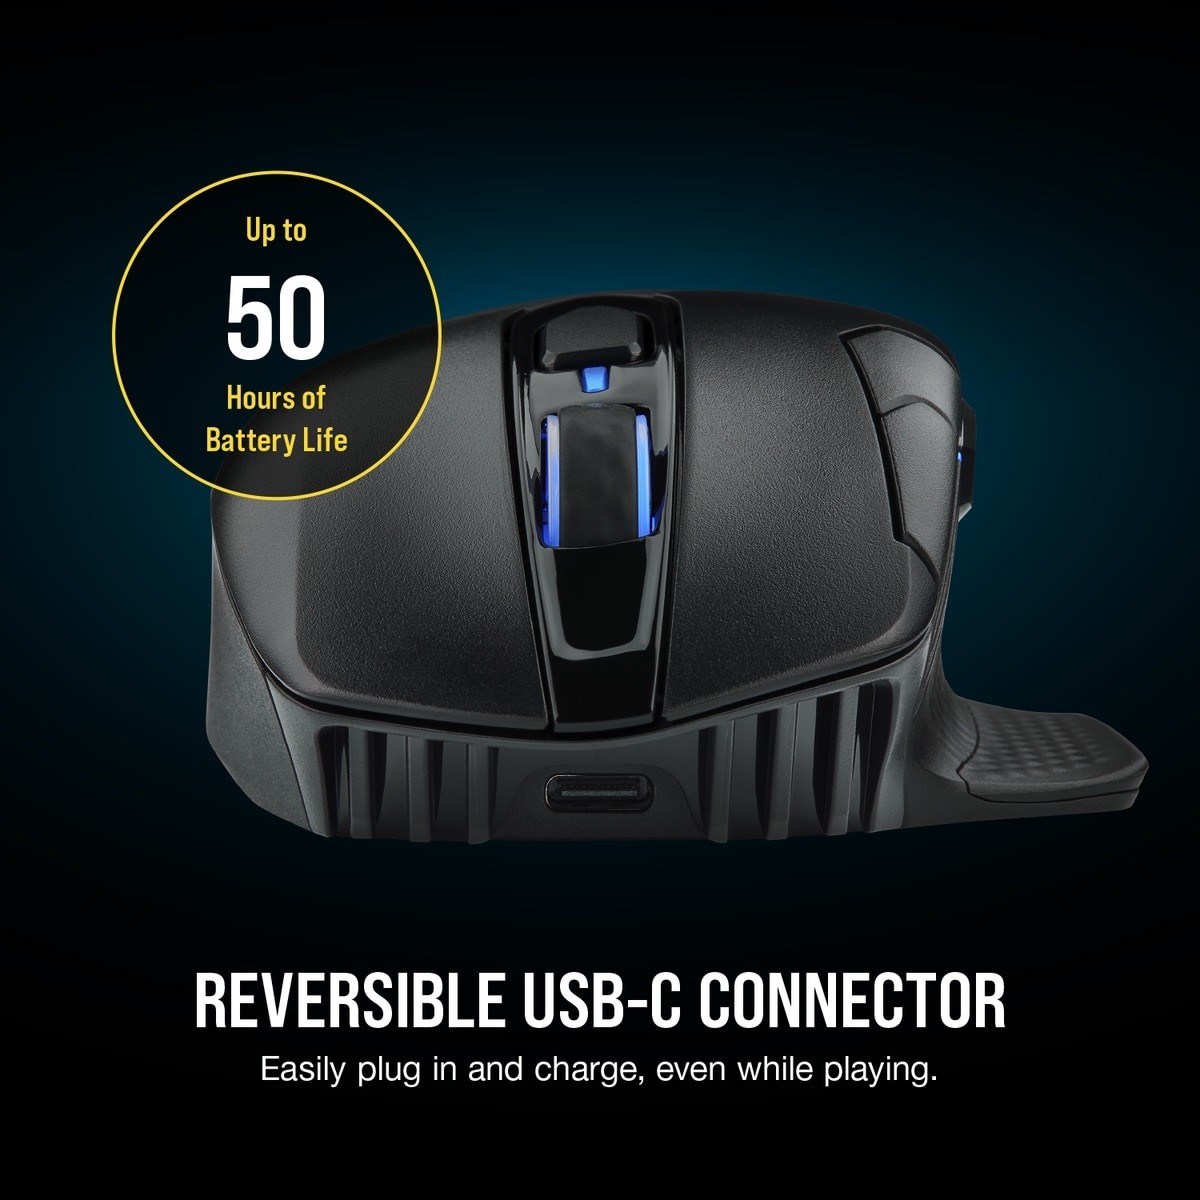 Mouse Gamer Sem Fio Corsair Dark Core RGB PRO, 18.000DPI, 8 Botões Programáveis, Black, CH-9315411-NA